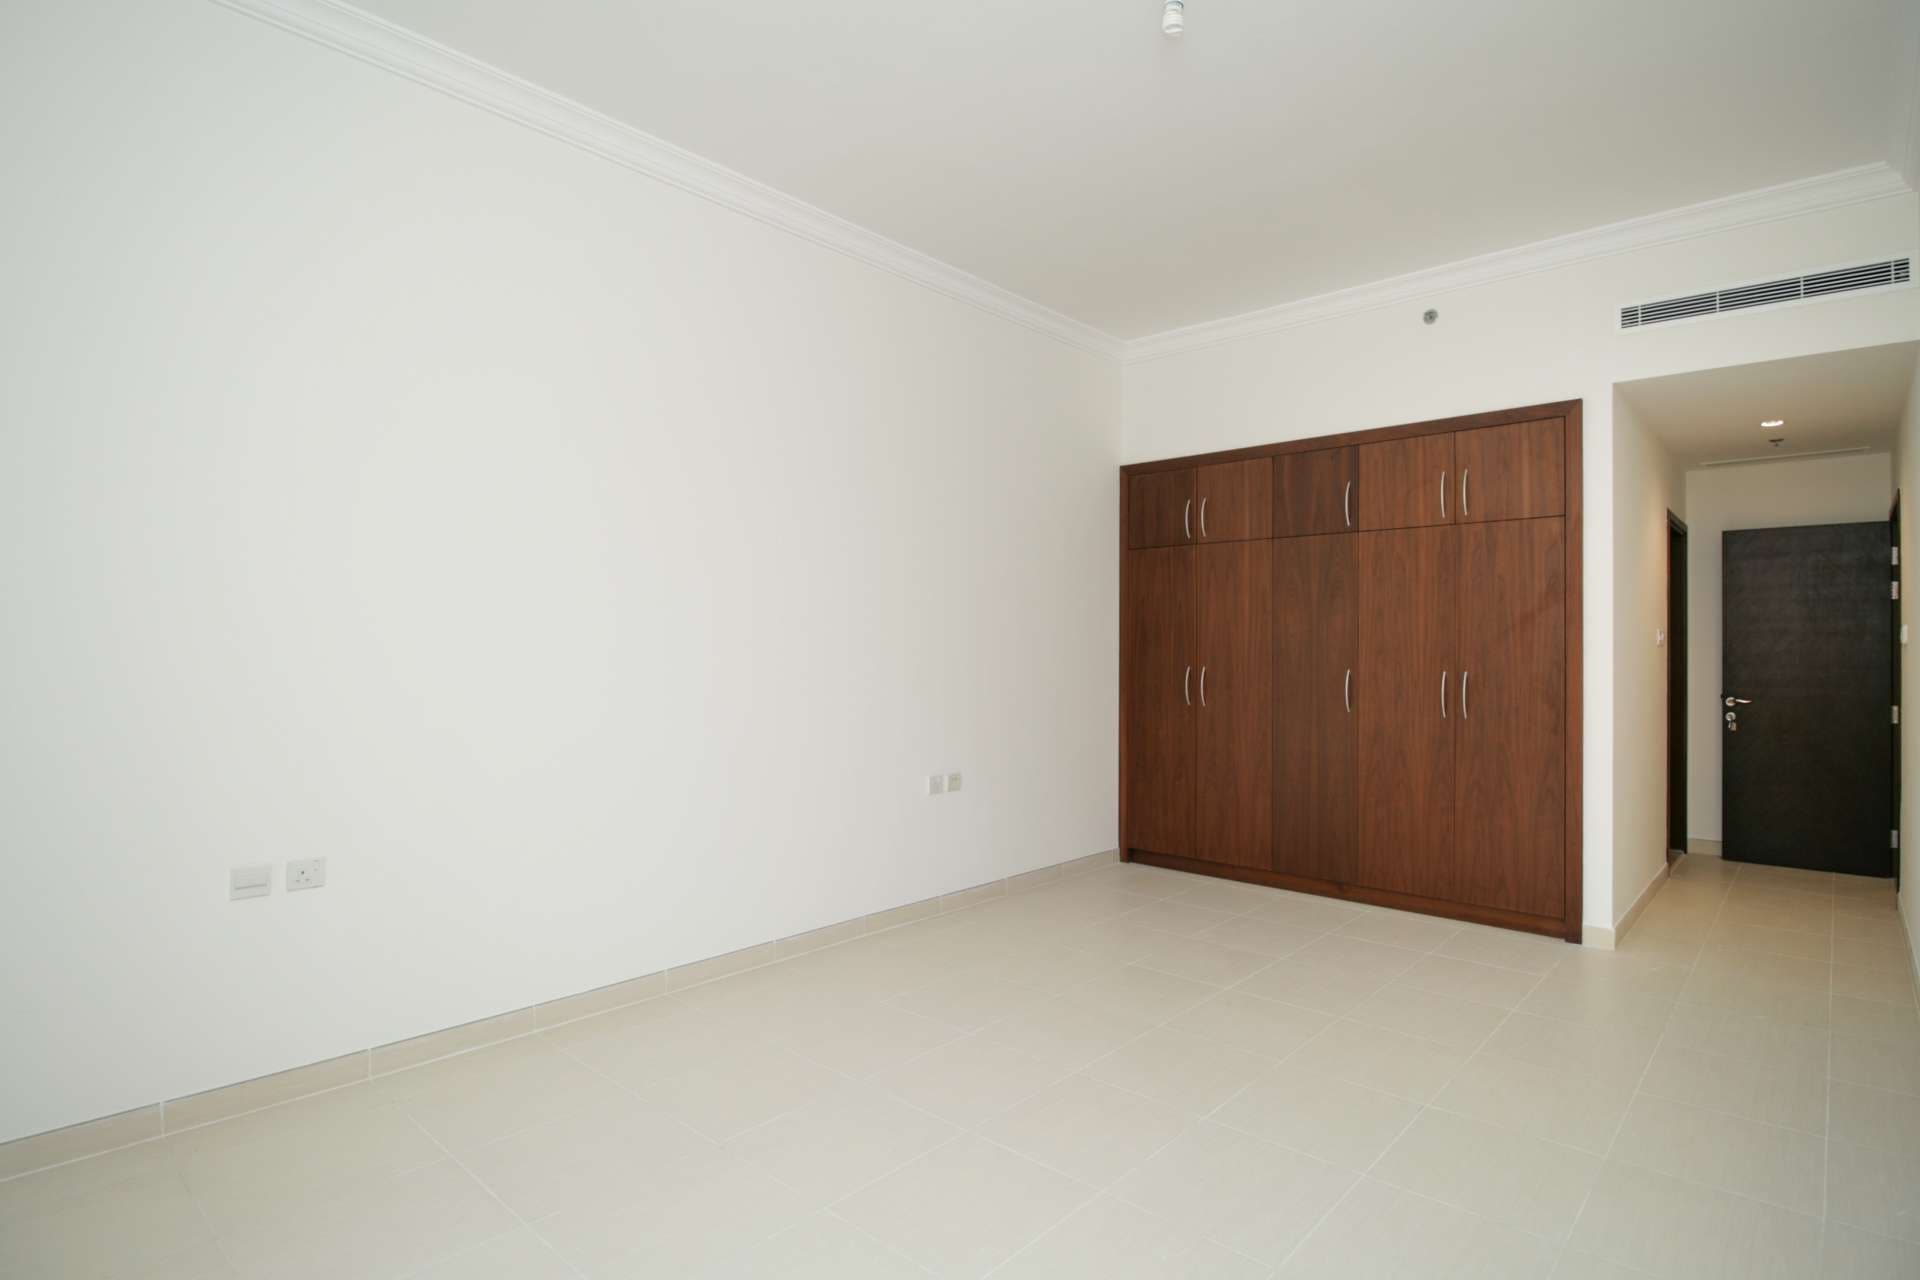 1 Bedroom Apartment For Sale Sarai Apartments Lp04850 1393a3e51eafa900.jpg